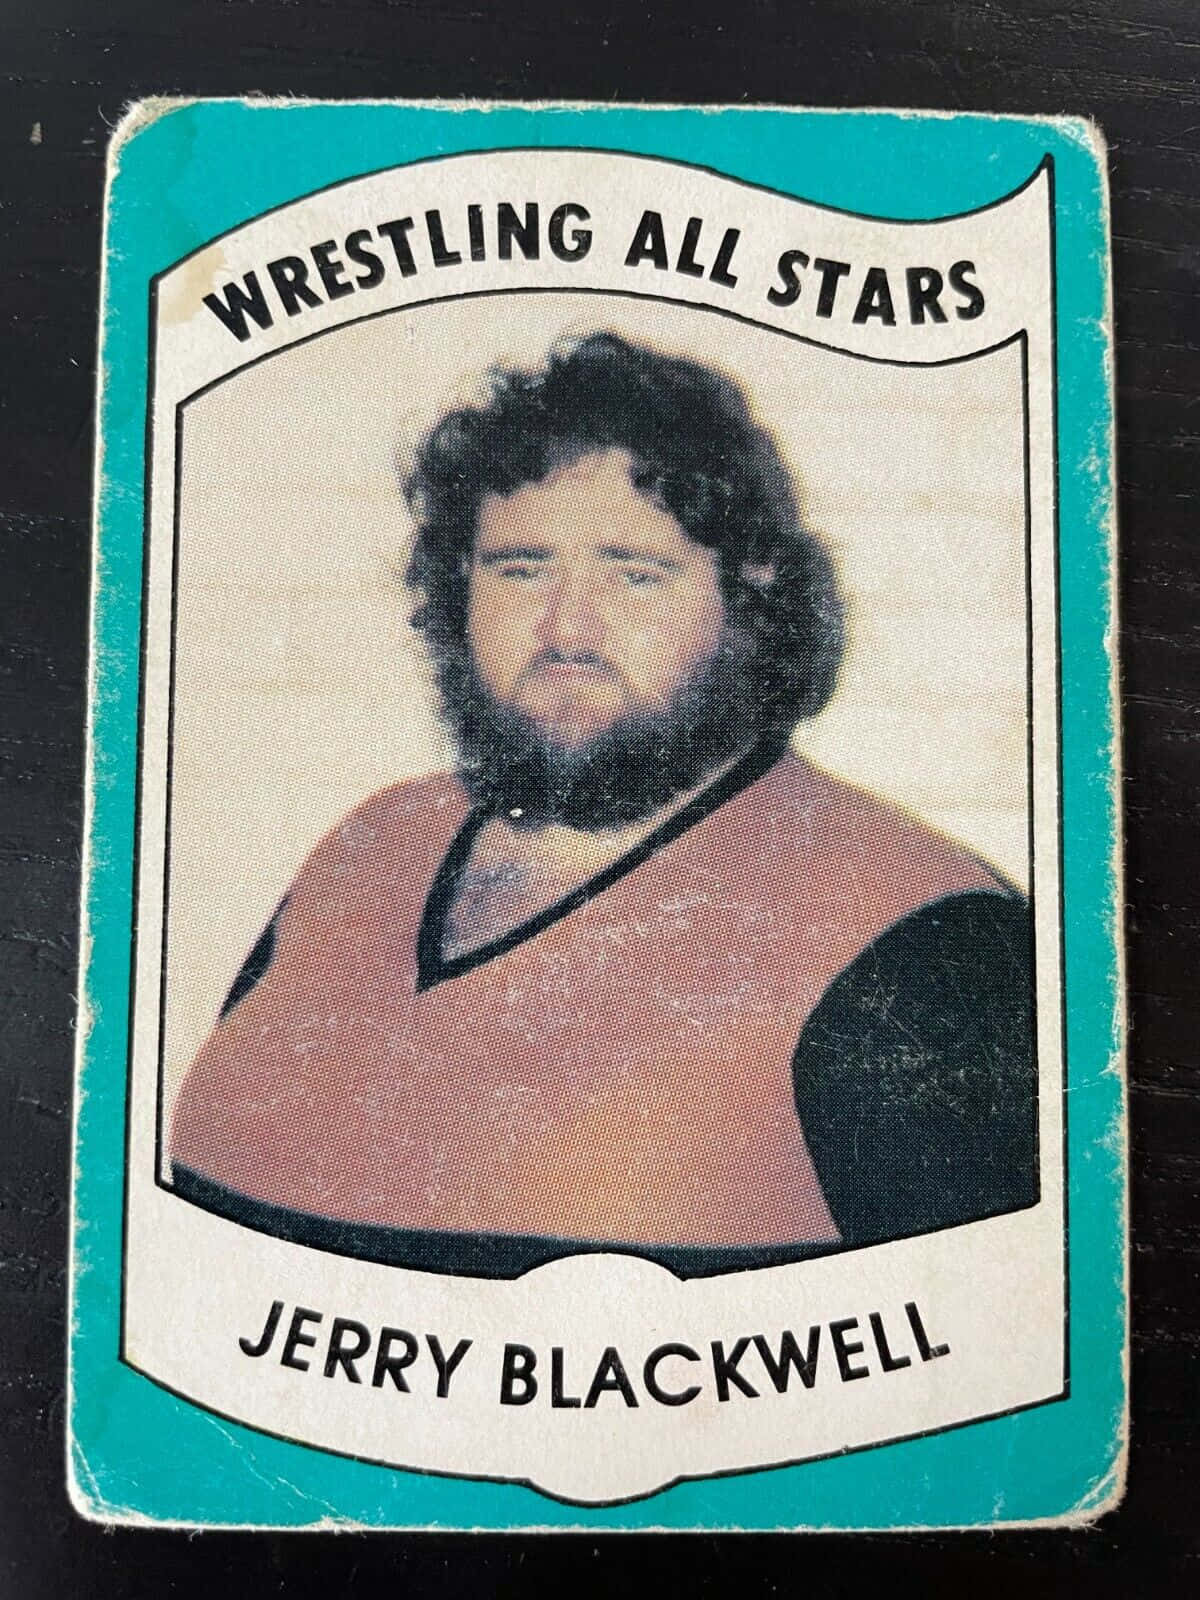 Jerry Blackwell Wrestling All Stars Card Wallpaper